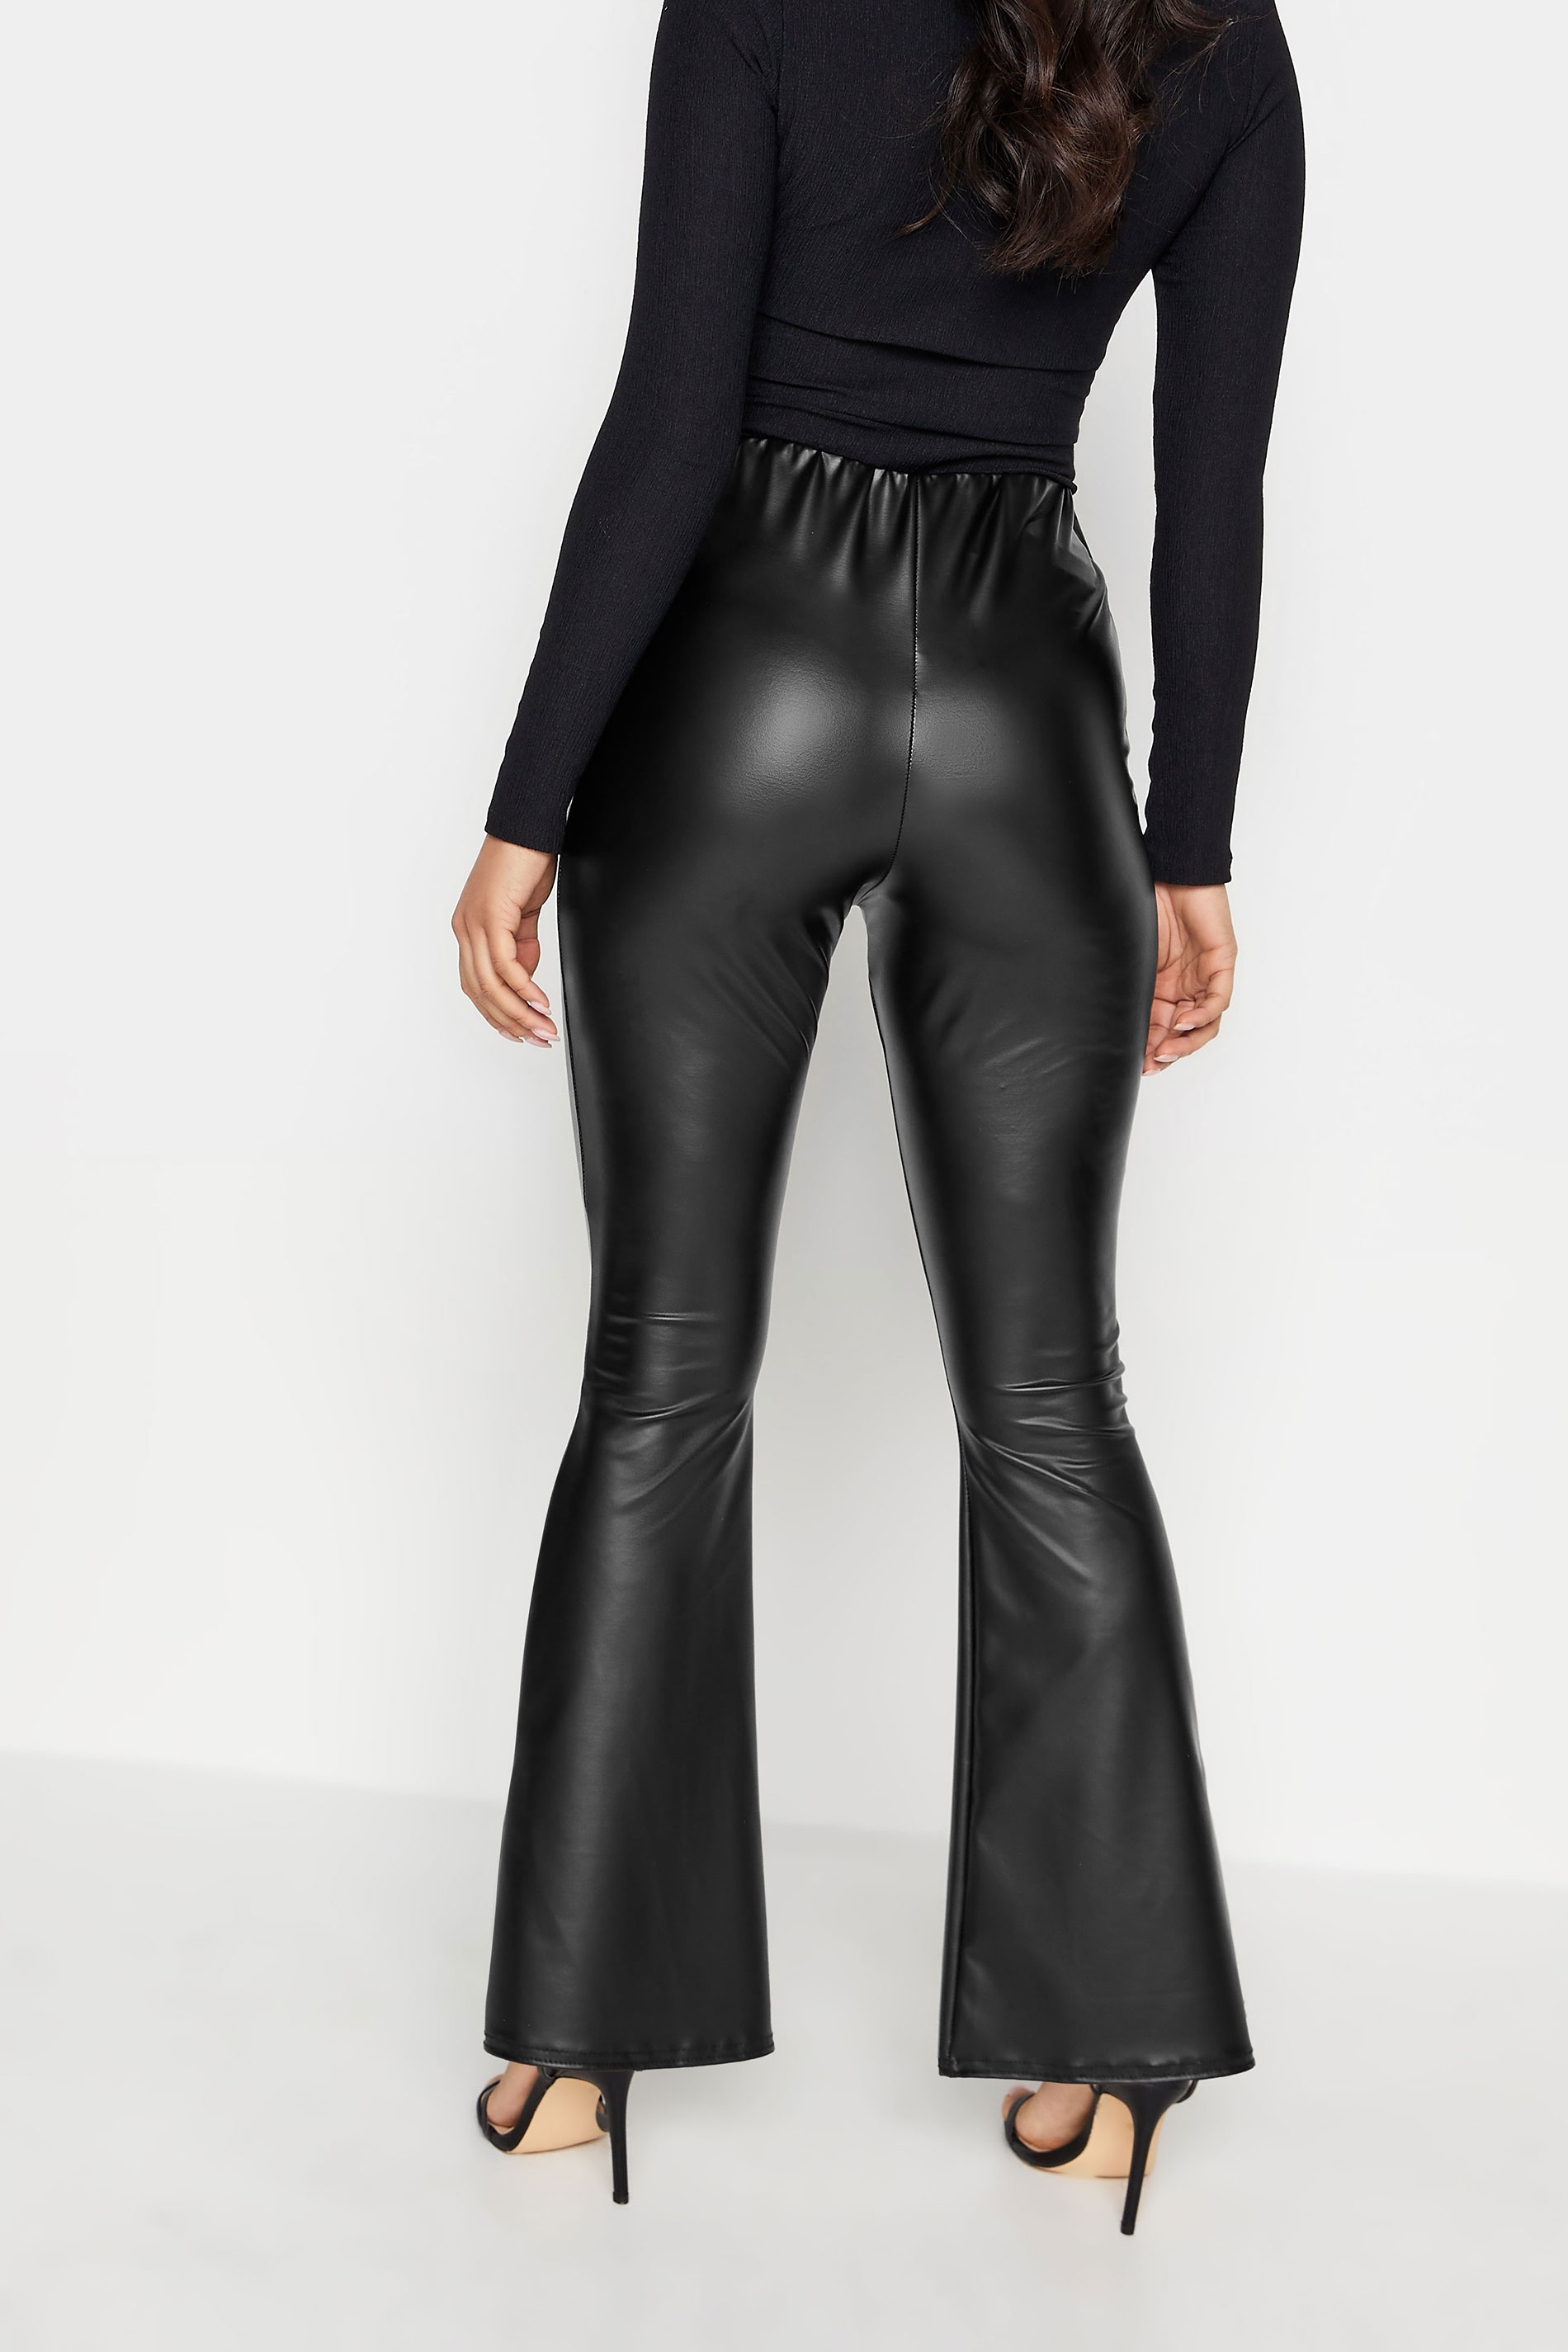 Petite Black Faux Leather Kick Flare Trousers | PixieGirl